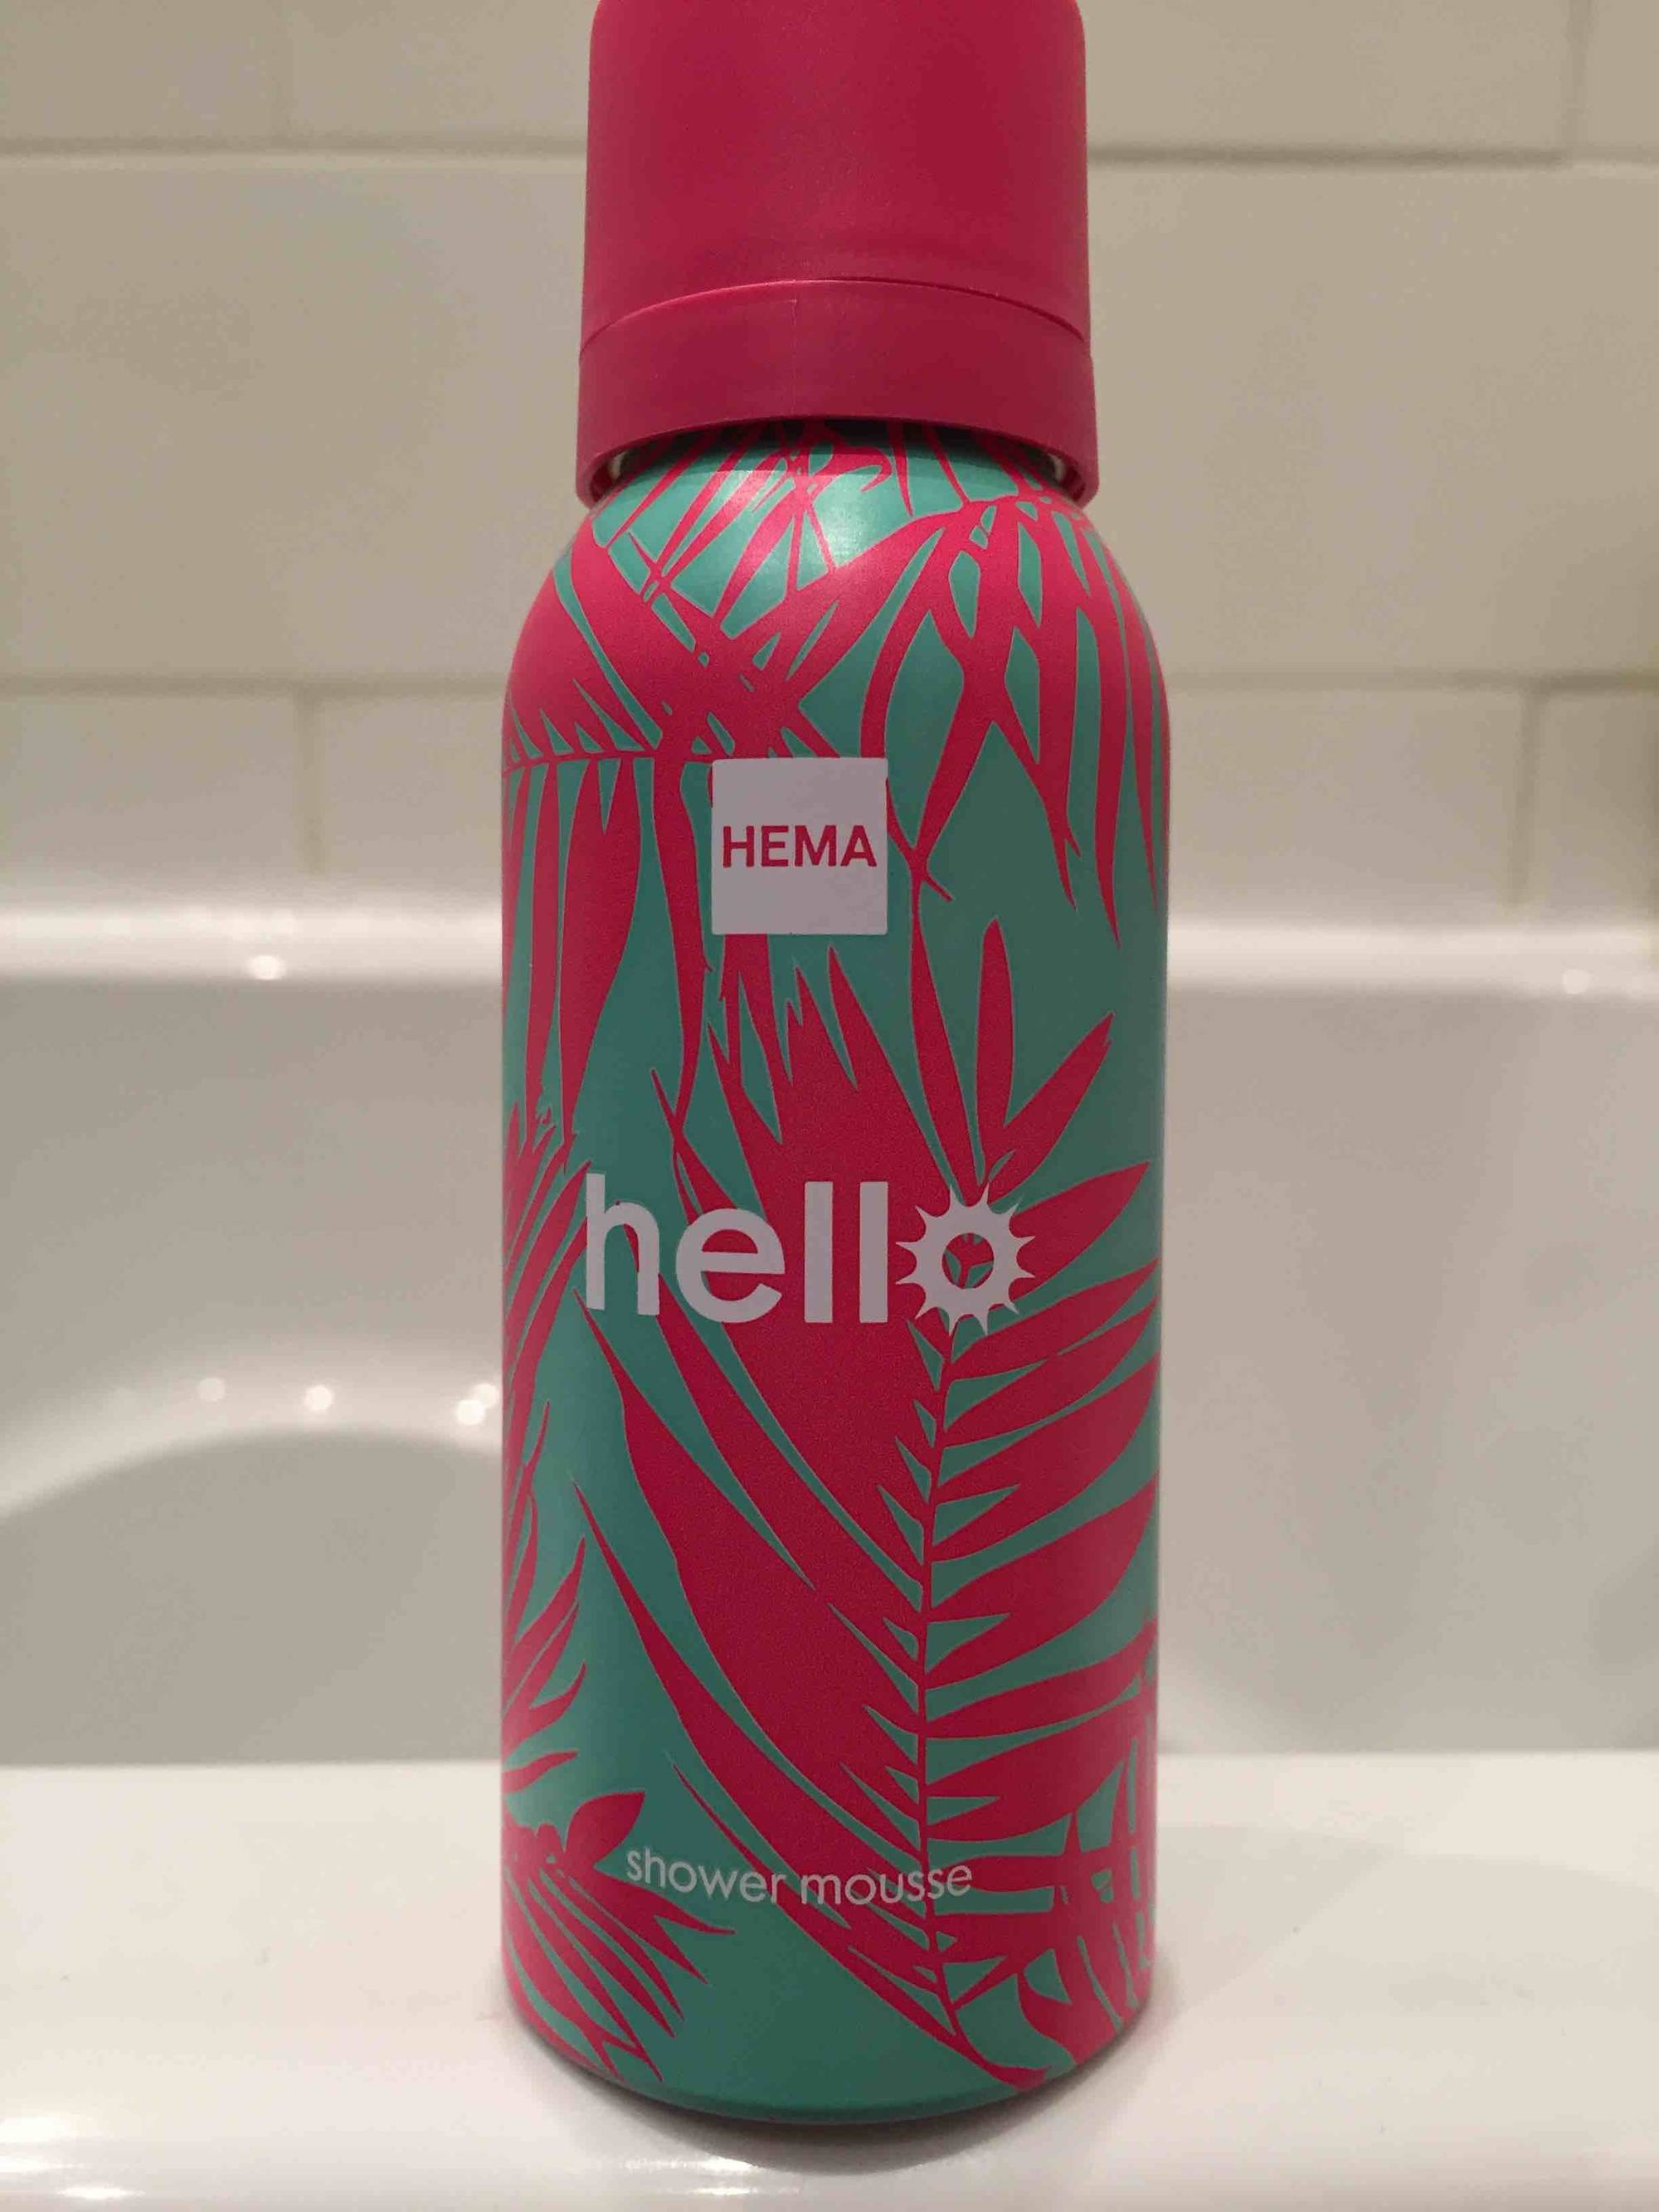 HEMA - Hello - Shower mousse